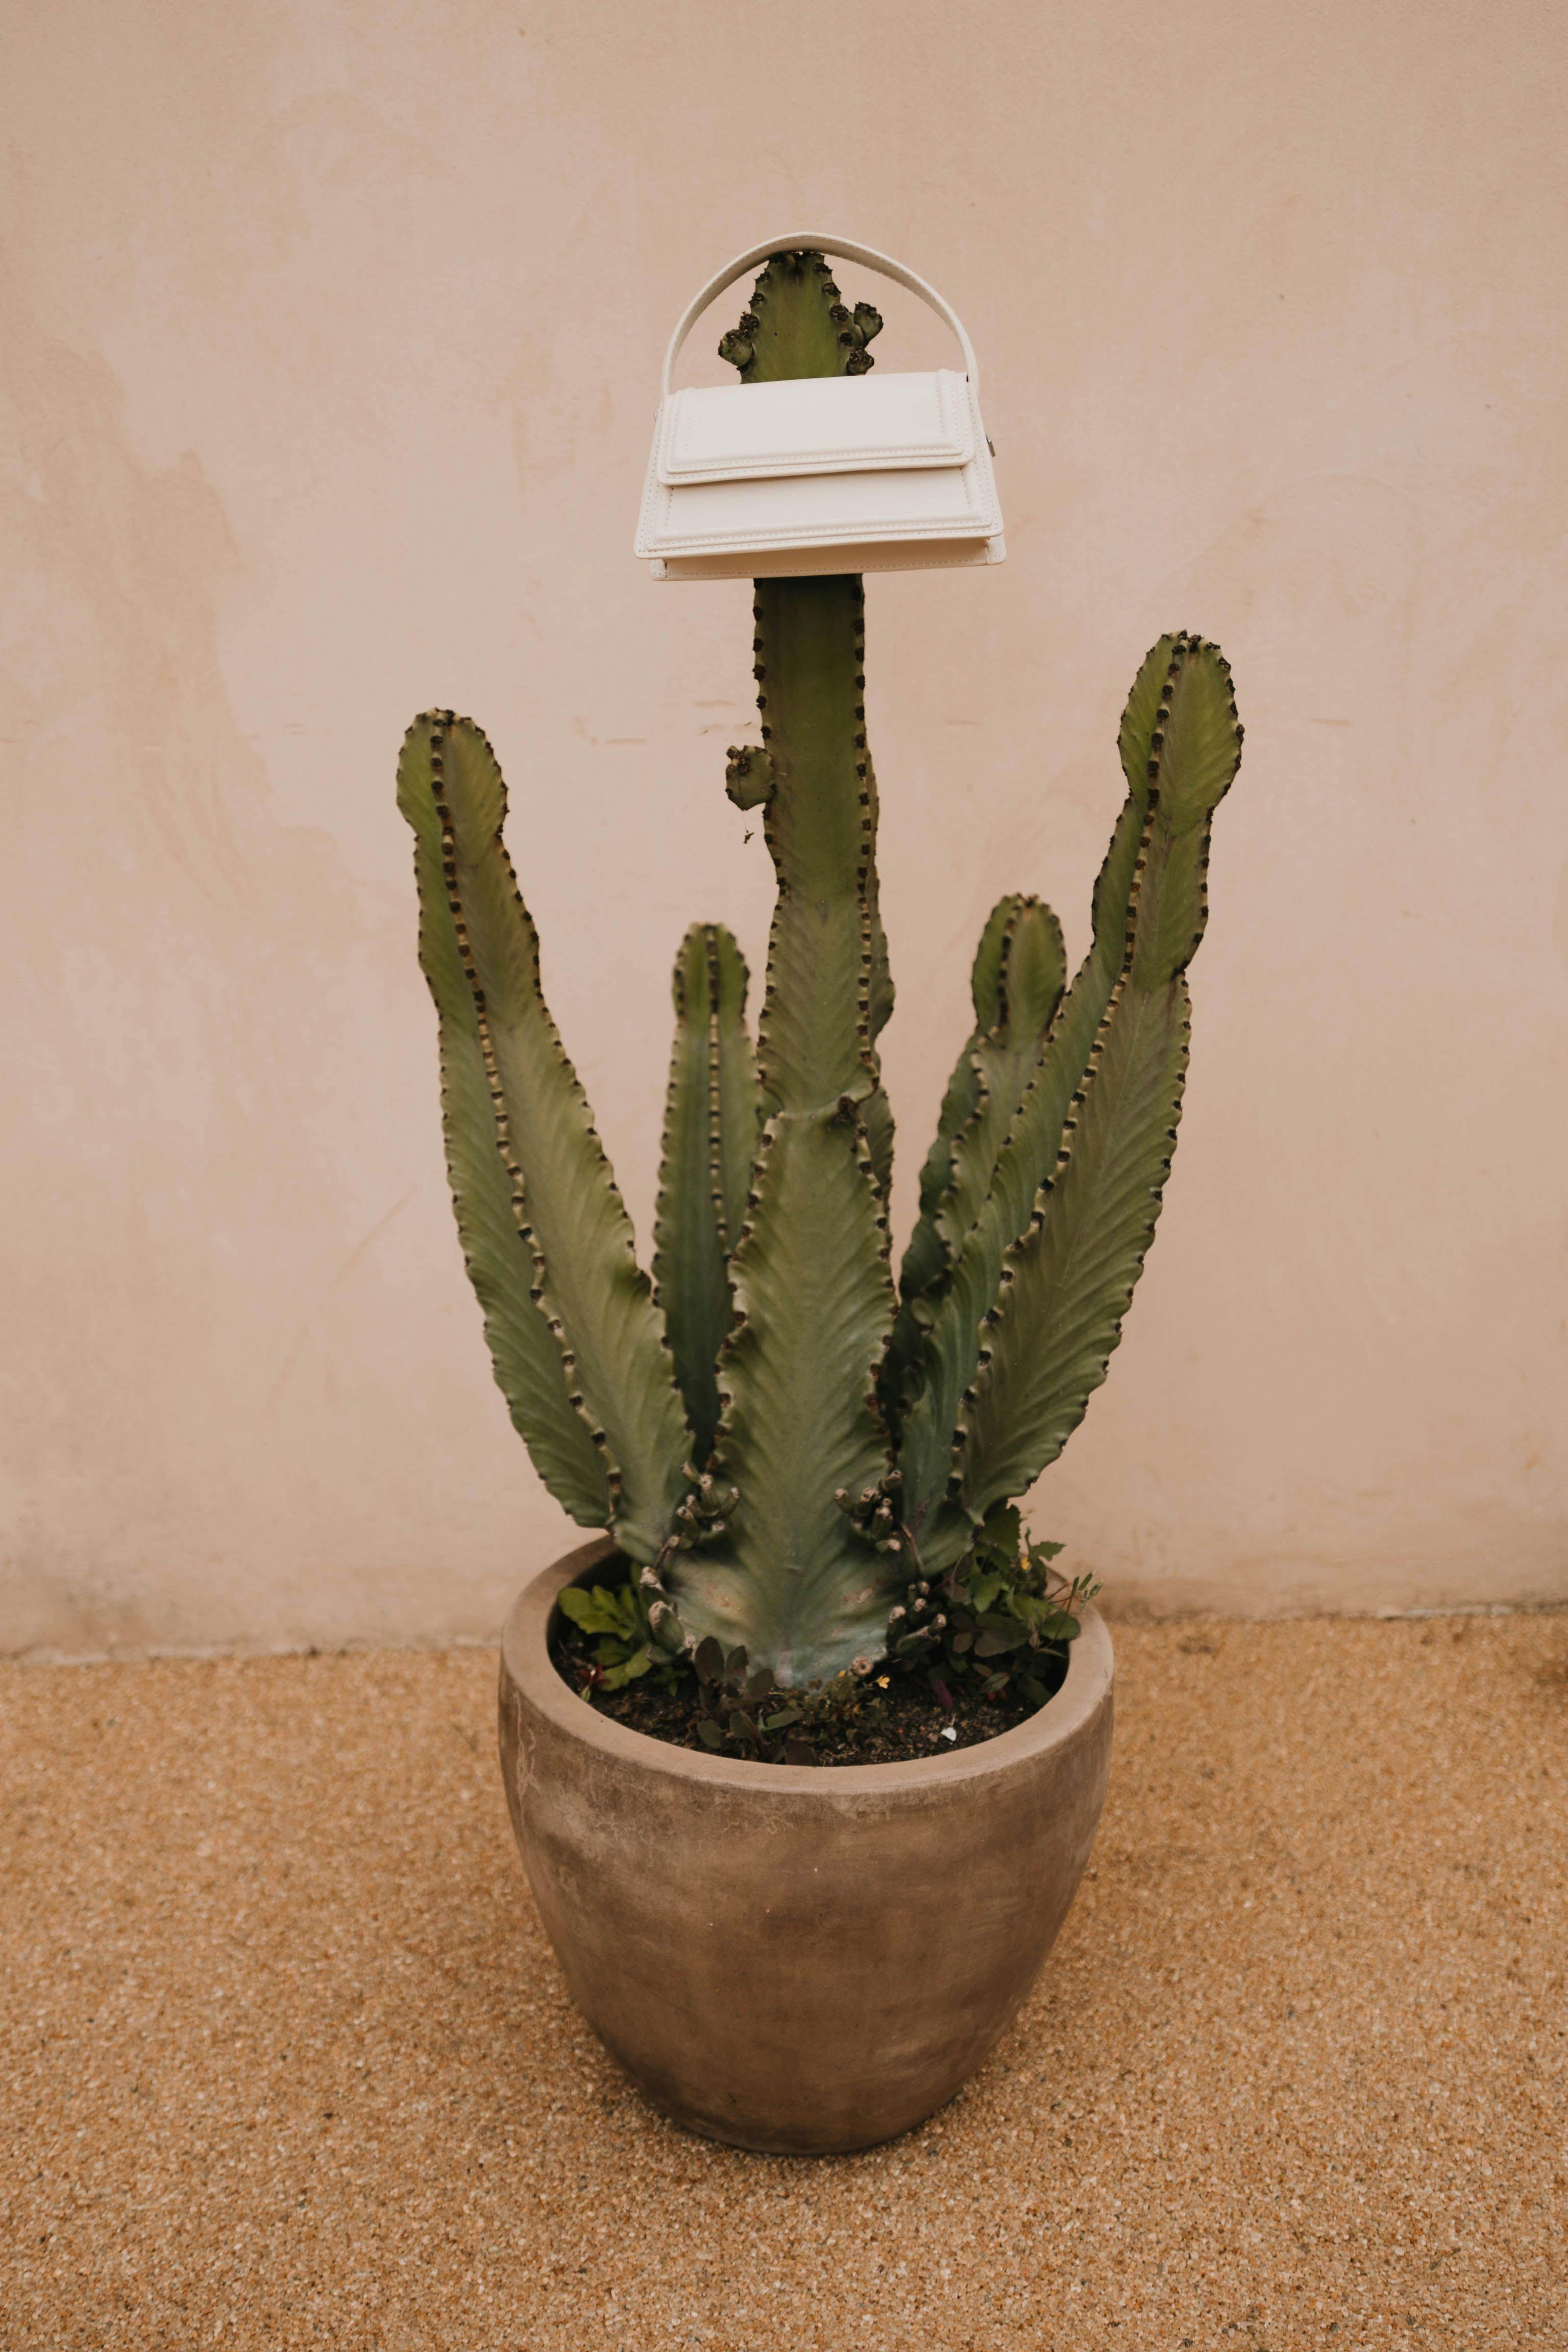 cactus with a bag